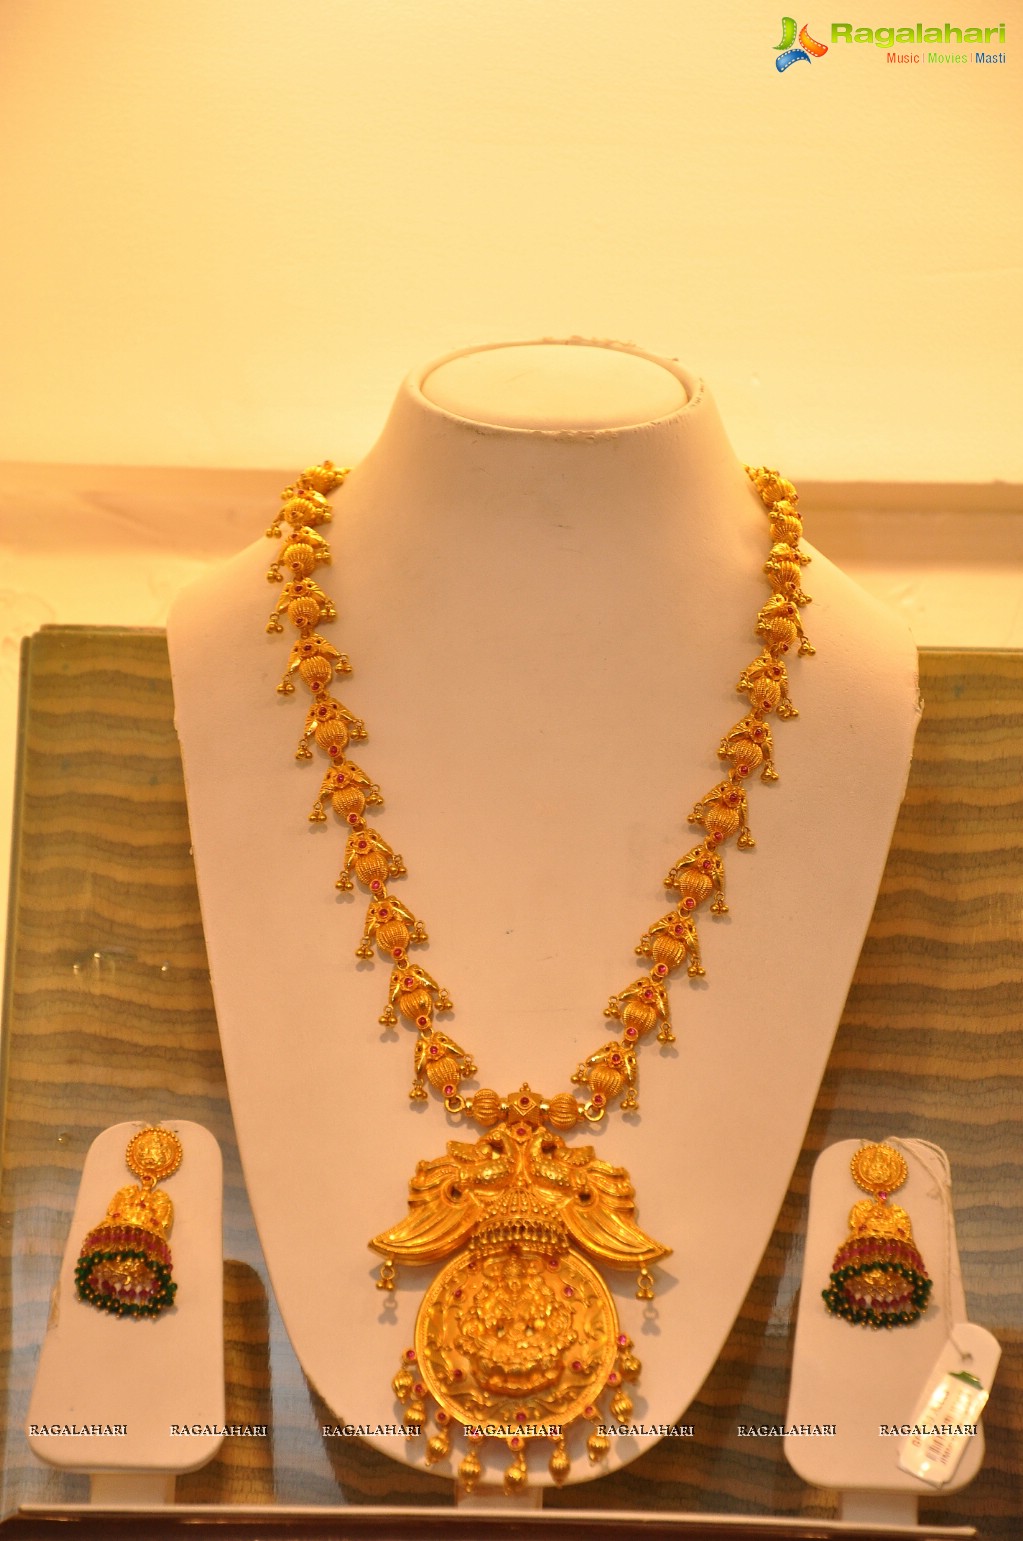 Samantha unveils Platinum Jewellery Collection at GRT Jewellers, Hyderabad